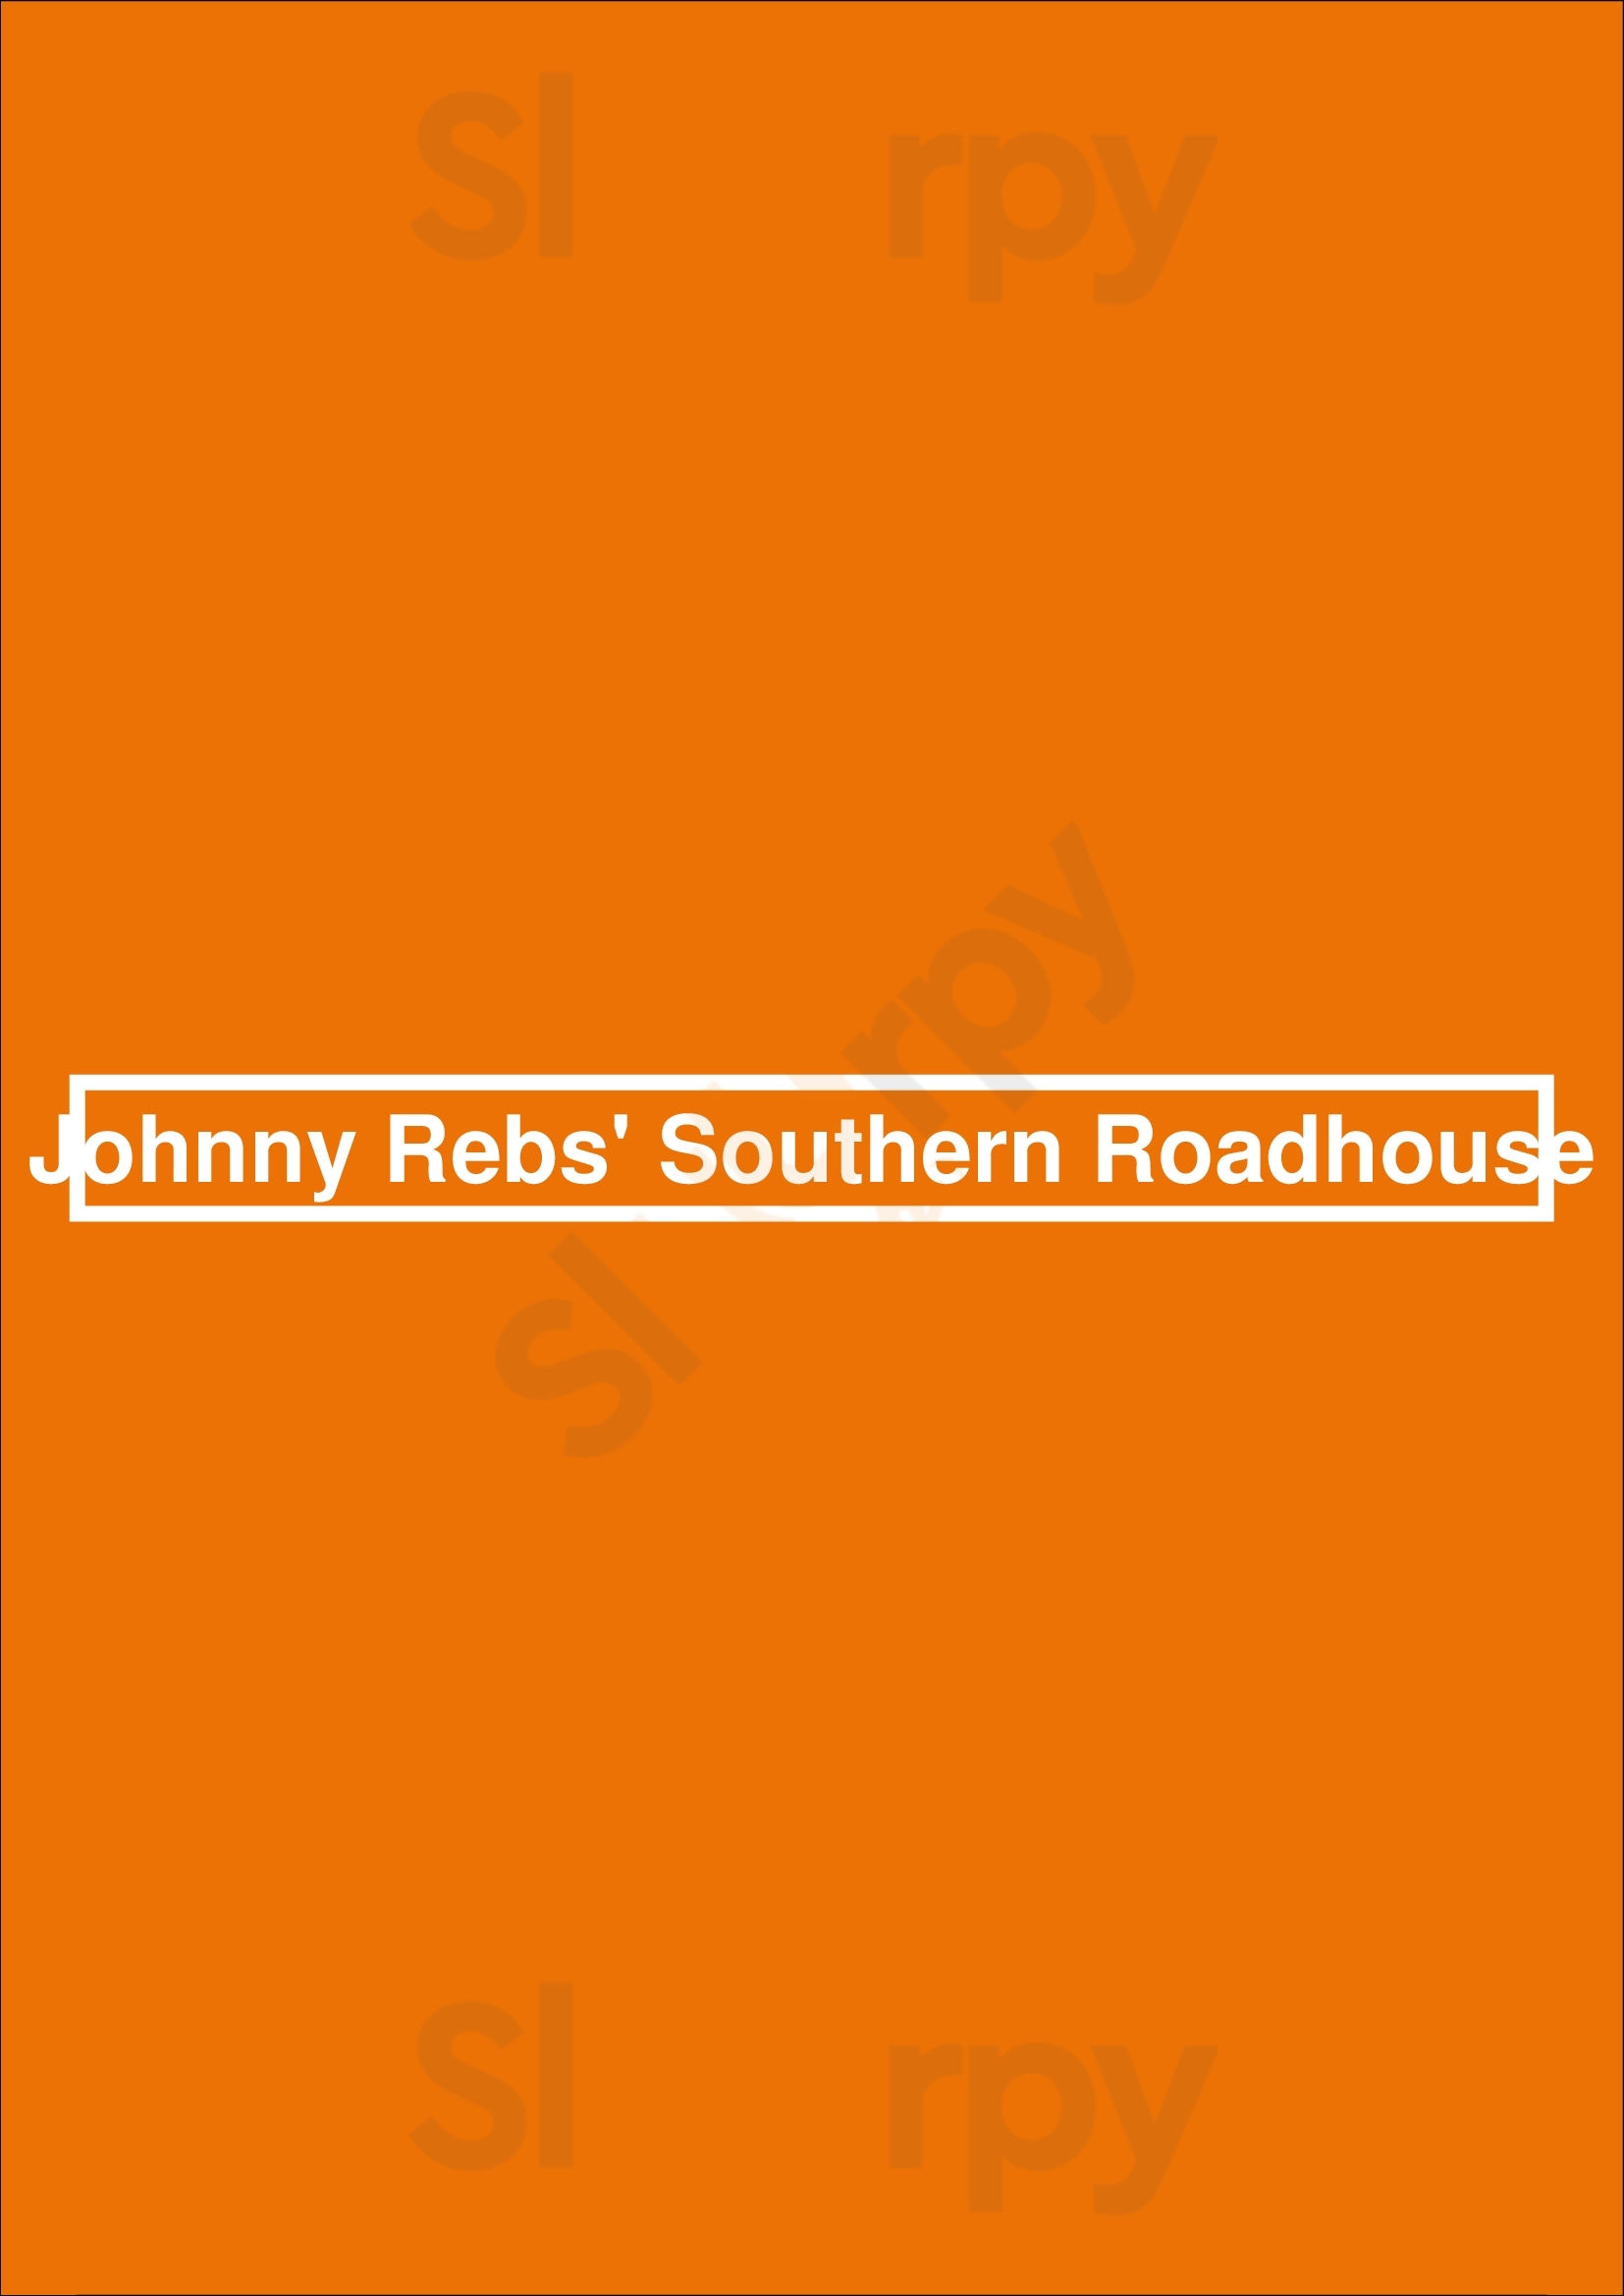 Johnny Rebs' True South Long Beach Menu - 1